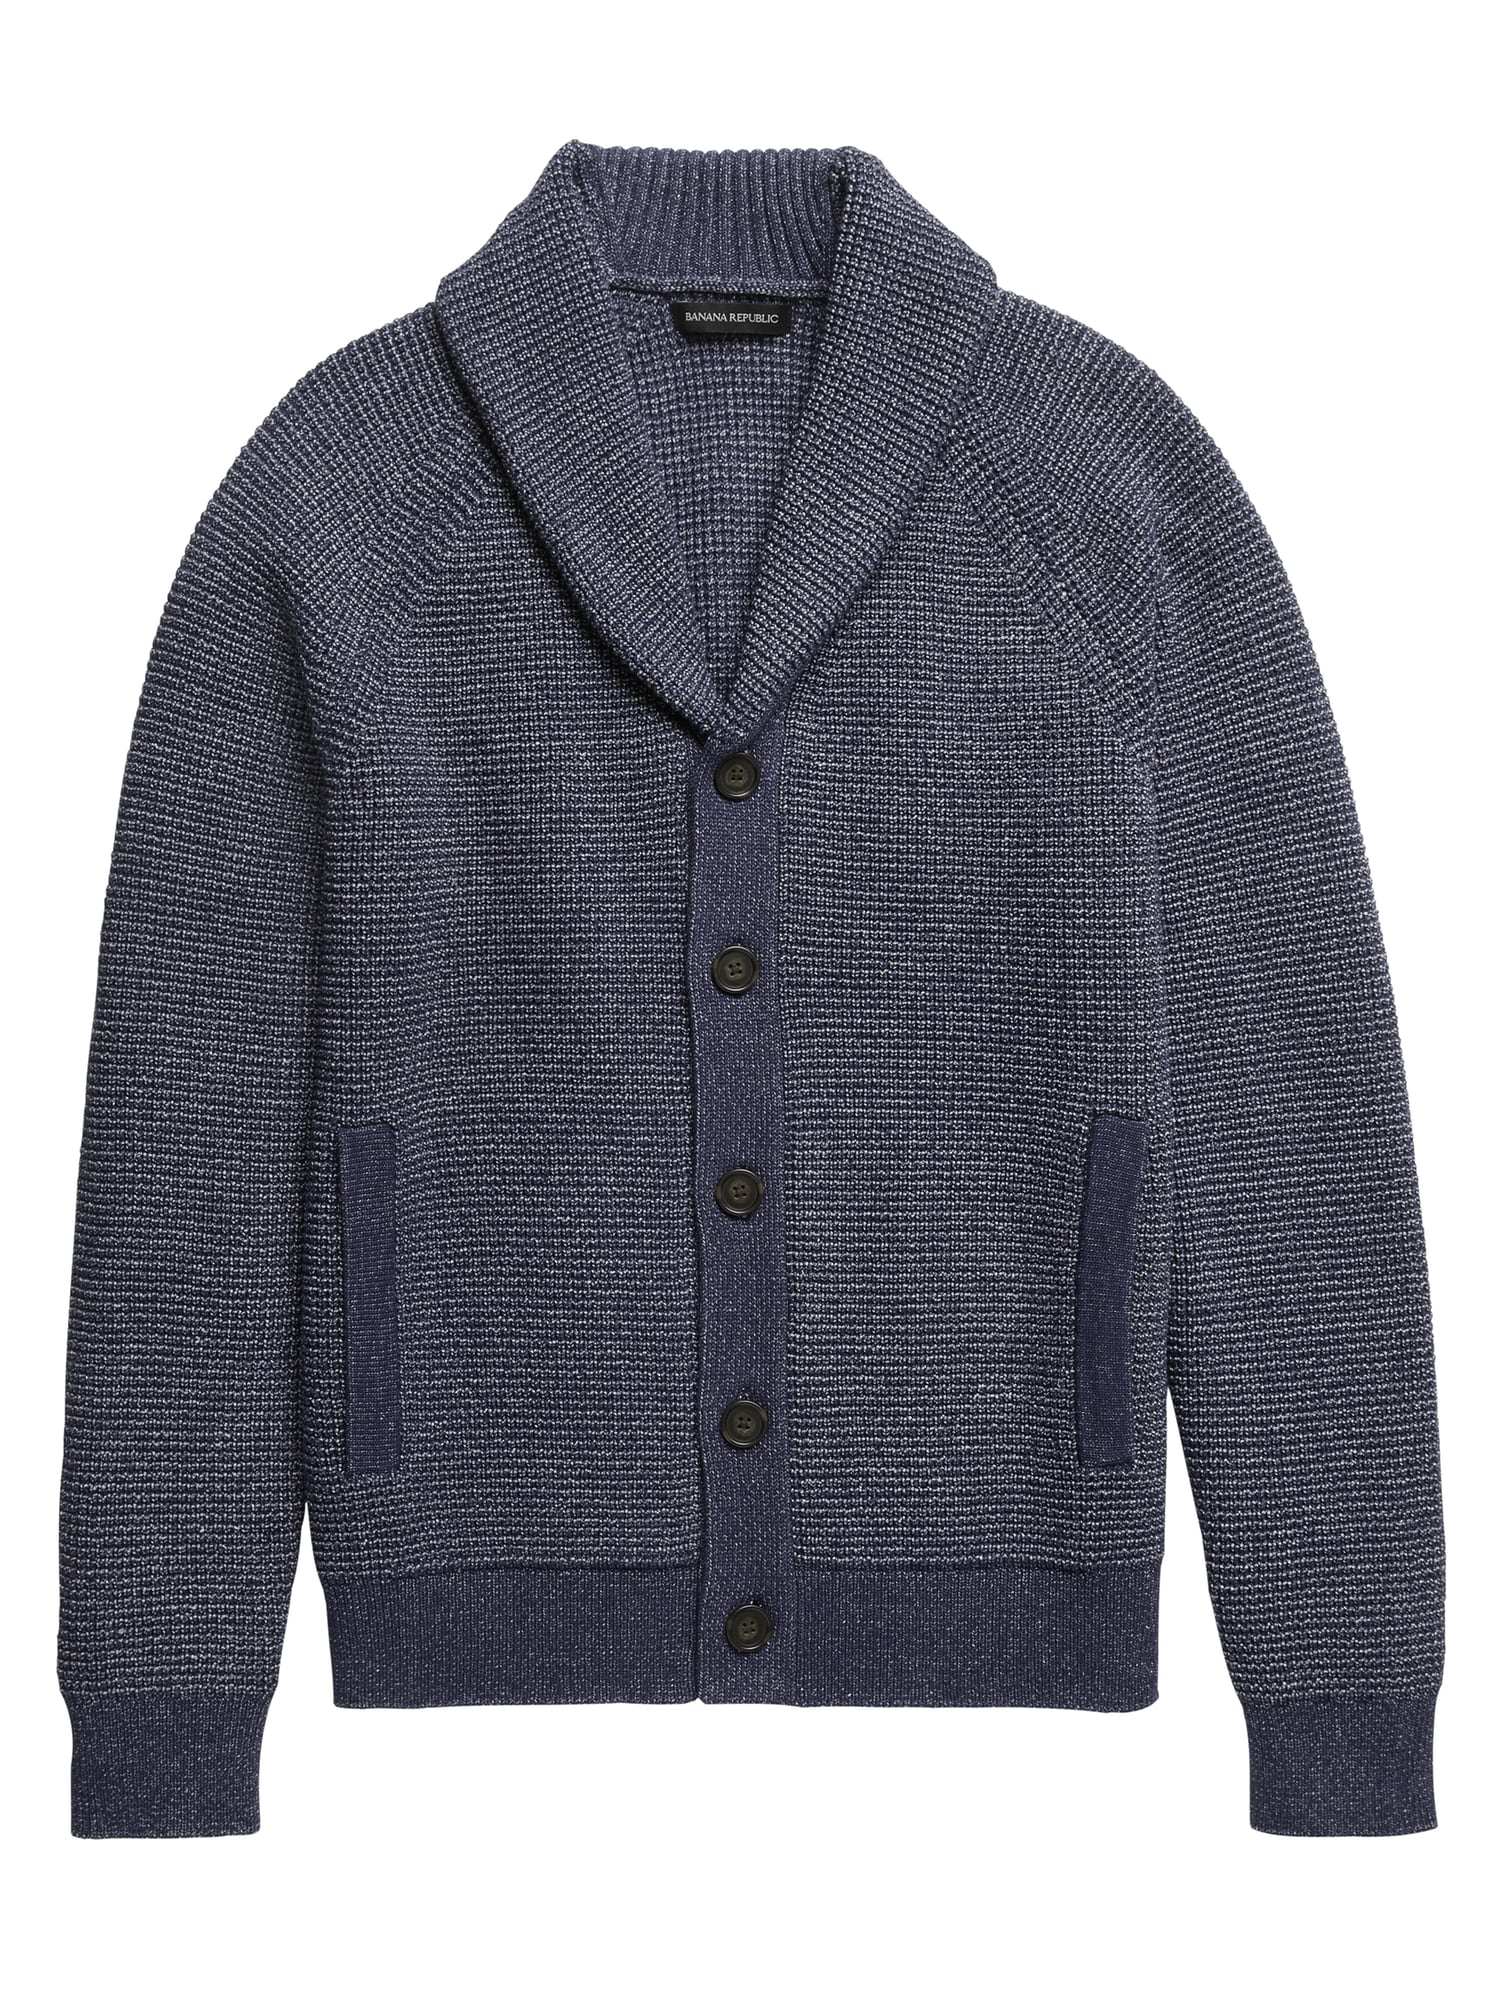 Shawl-Collar Cardigan Sweater